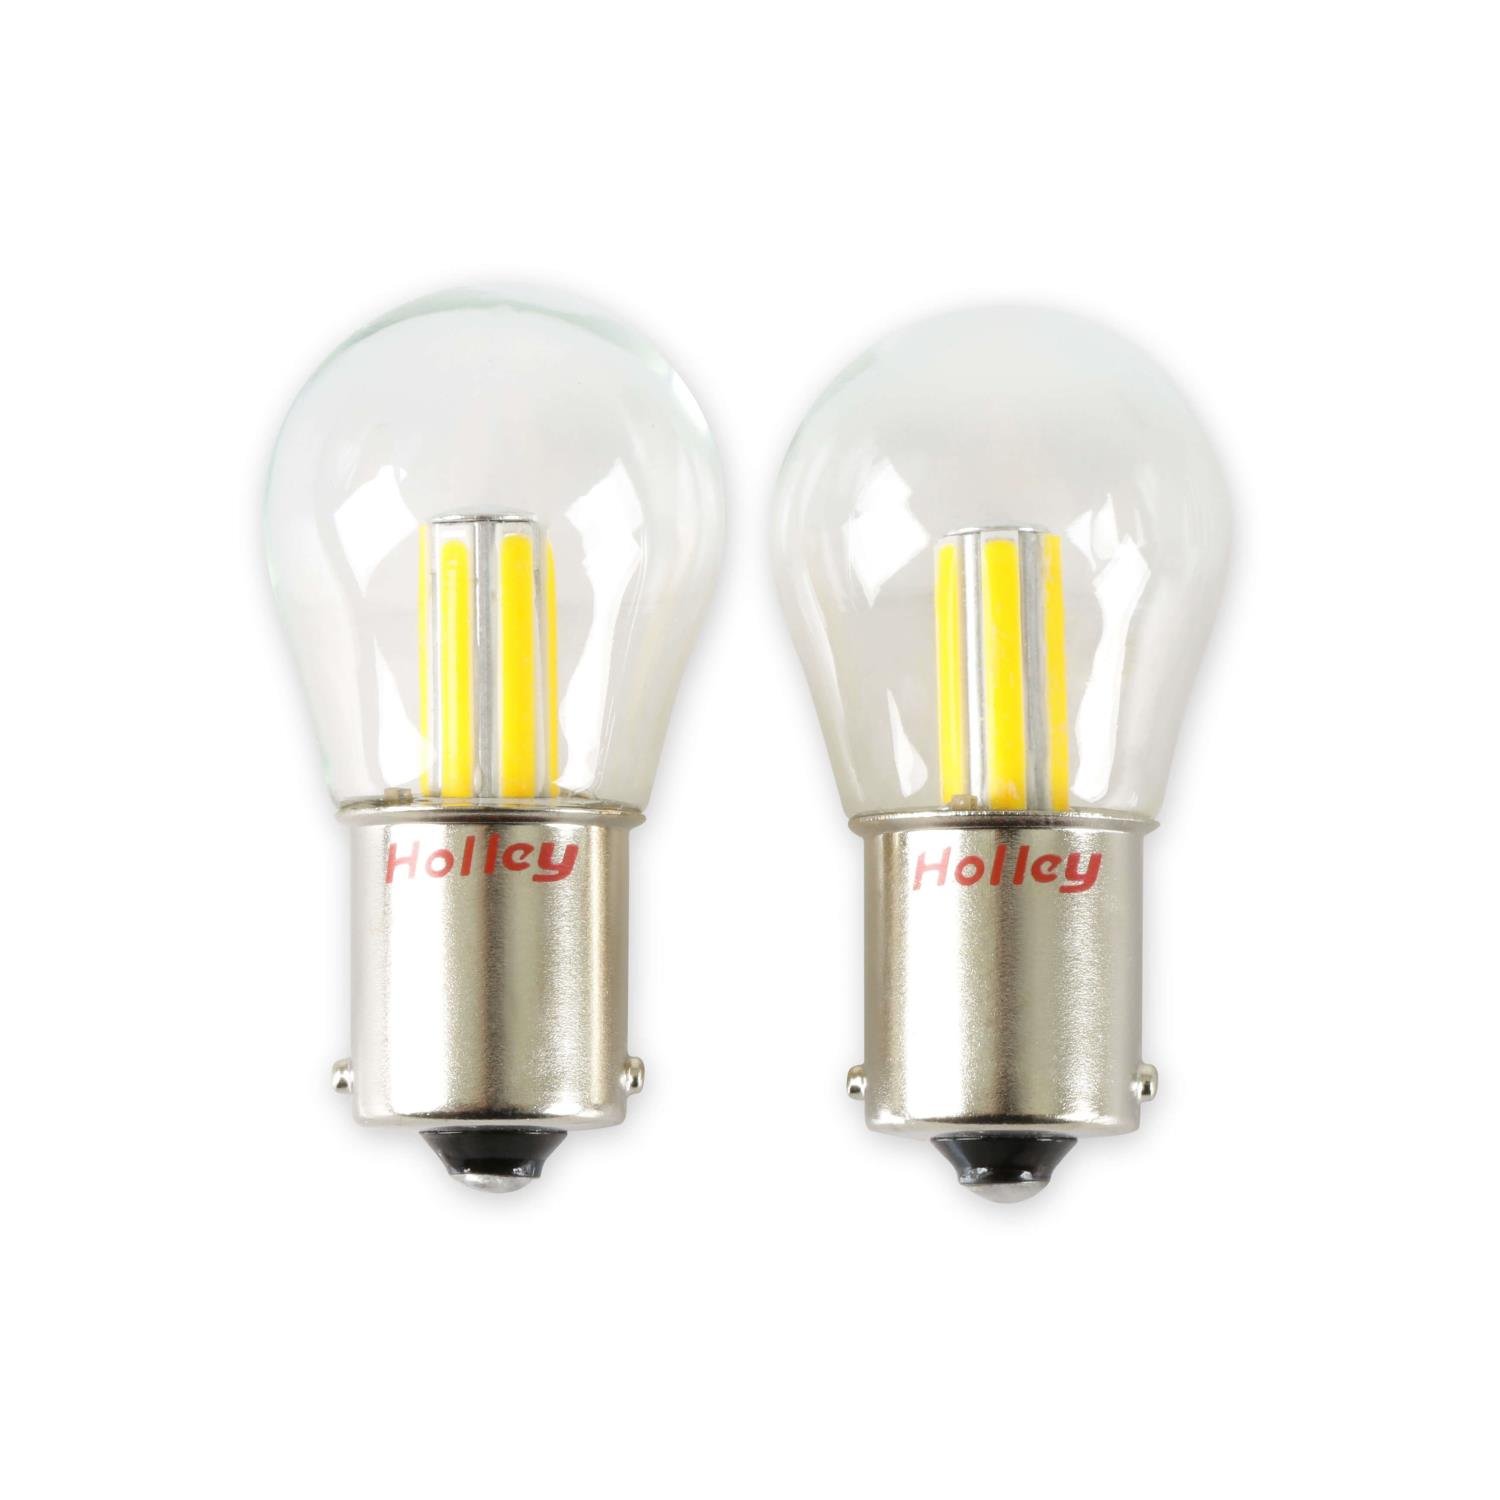 RetroBright LED 1156 Turn Signal / Parking Light Bulbs [Amber]